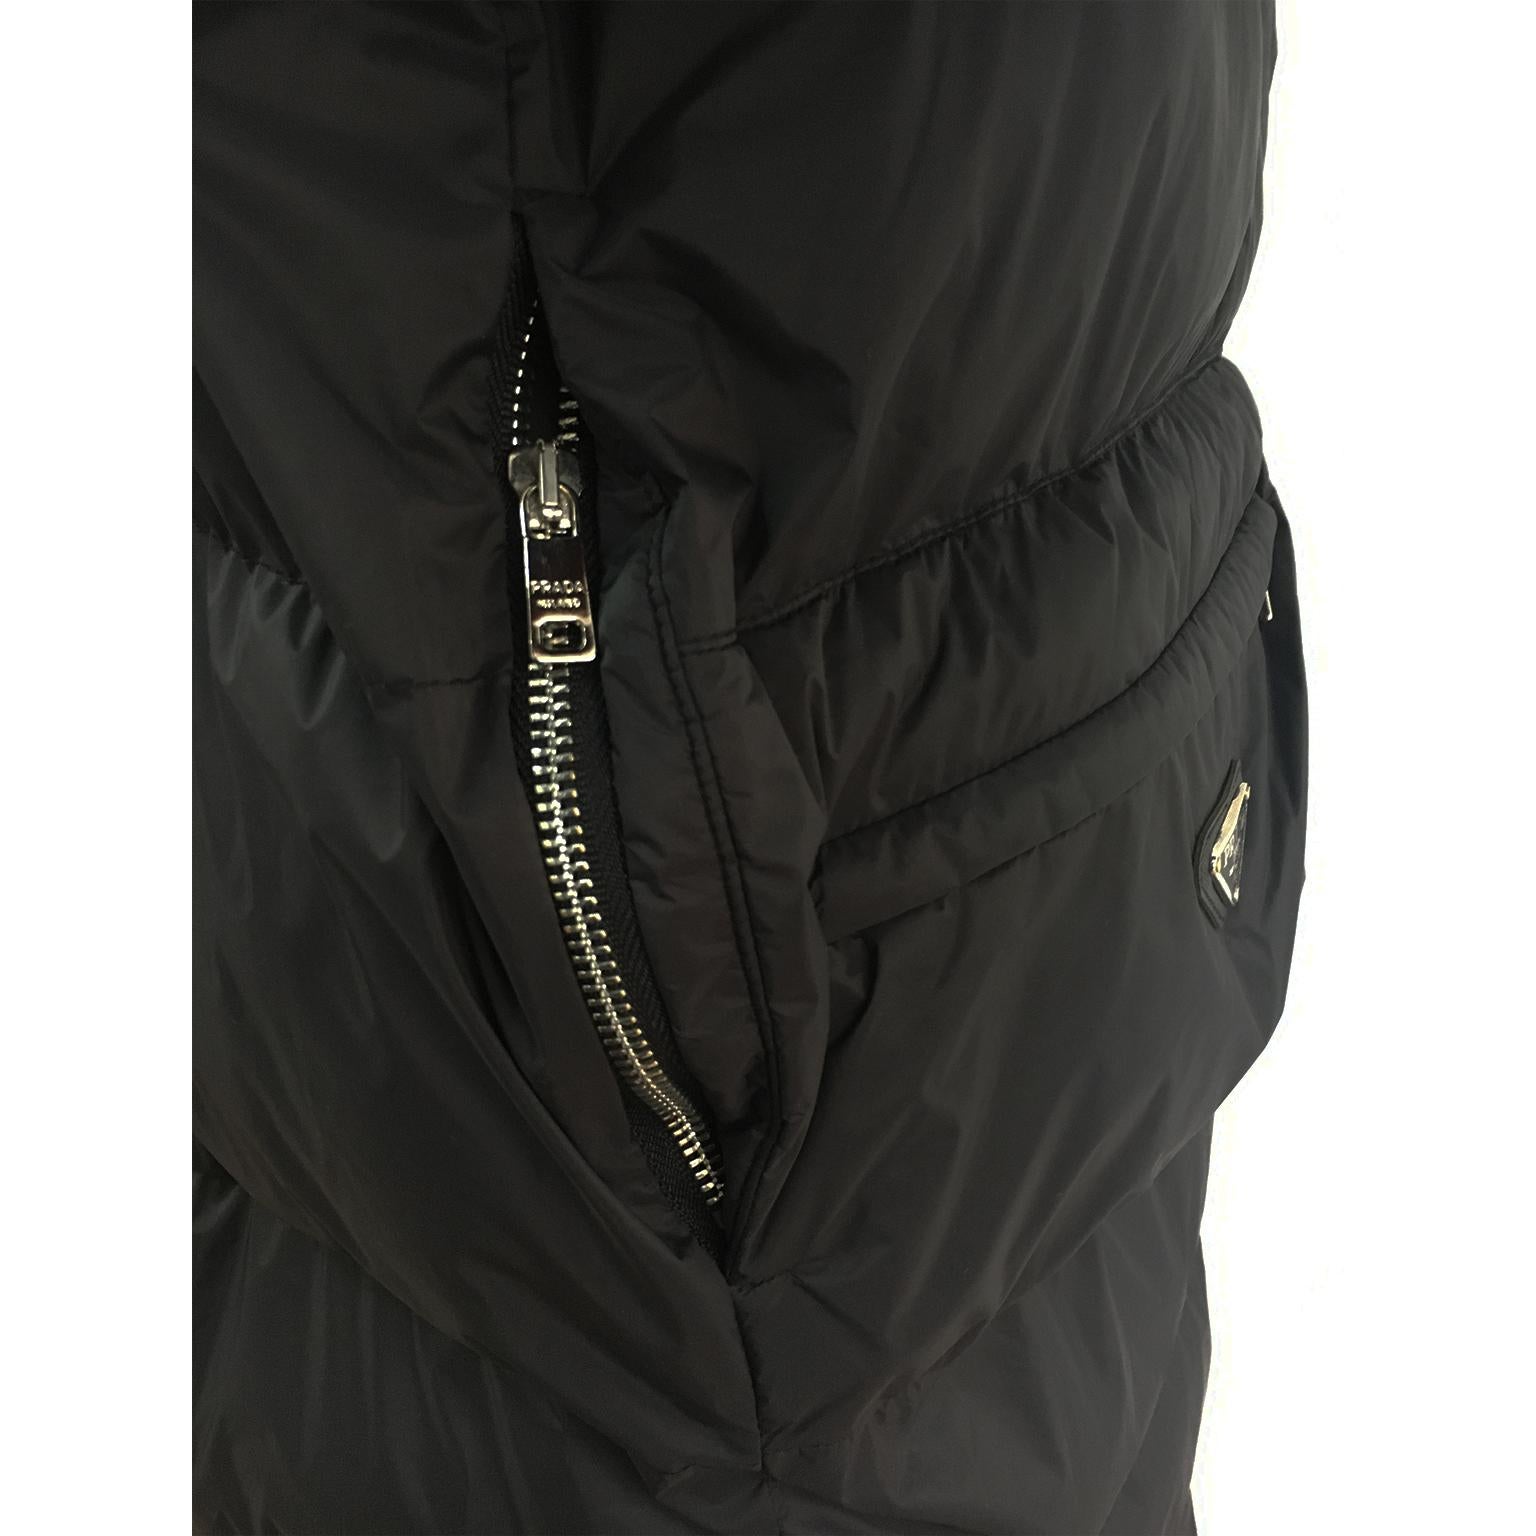 Prada Black Down Puffer Jacket Coat With Belt 2